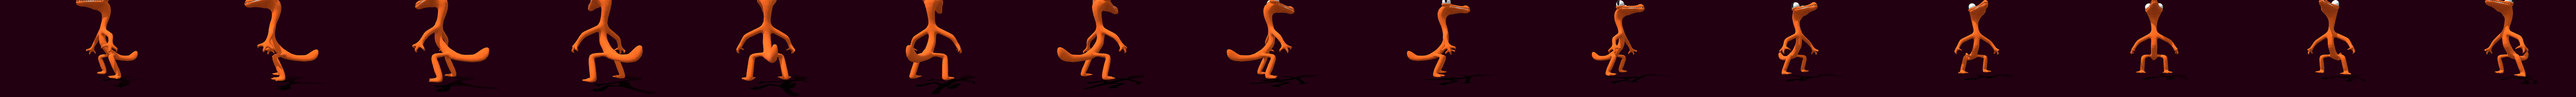 orange from rainbow friends - Download Free 3D model by Enzogolcalves  (@Enzogolcalves) [99ec19c]